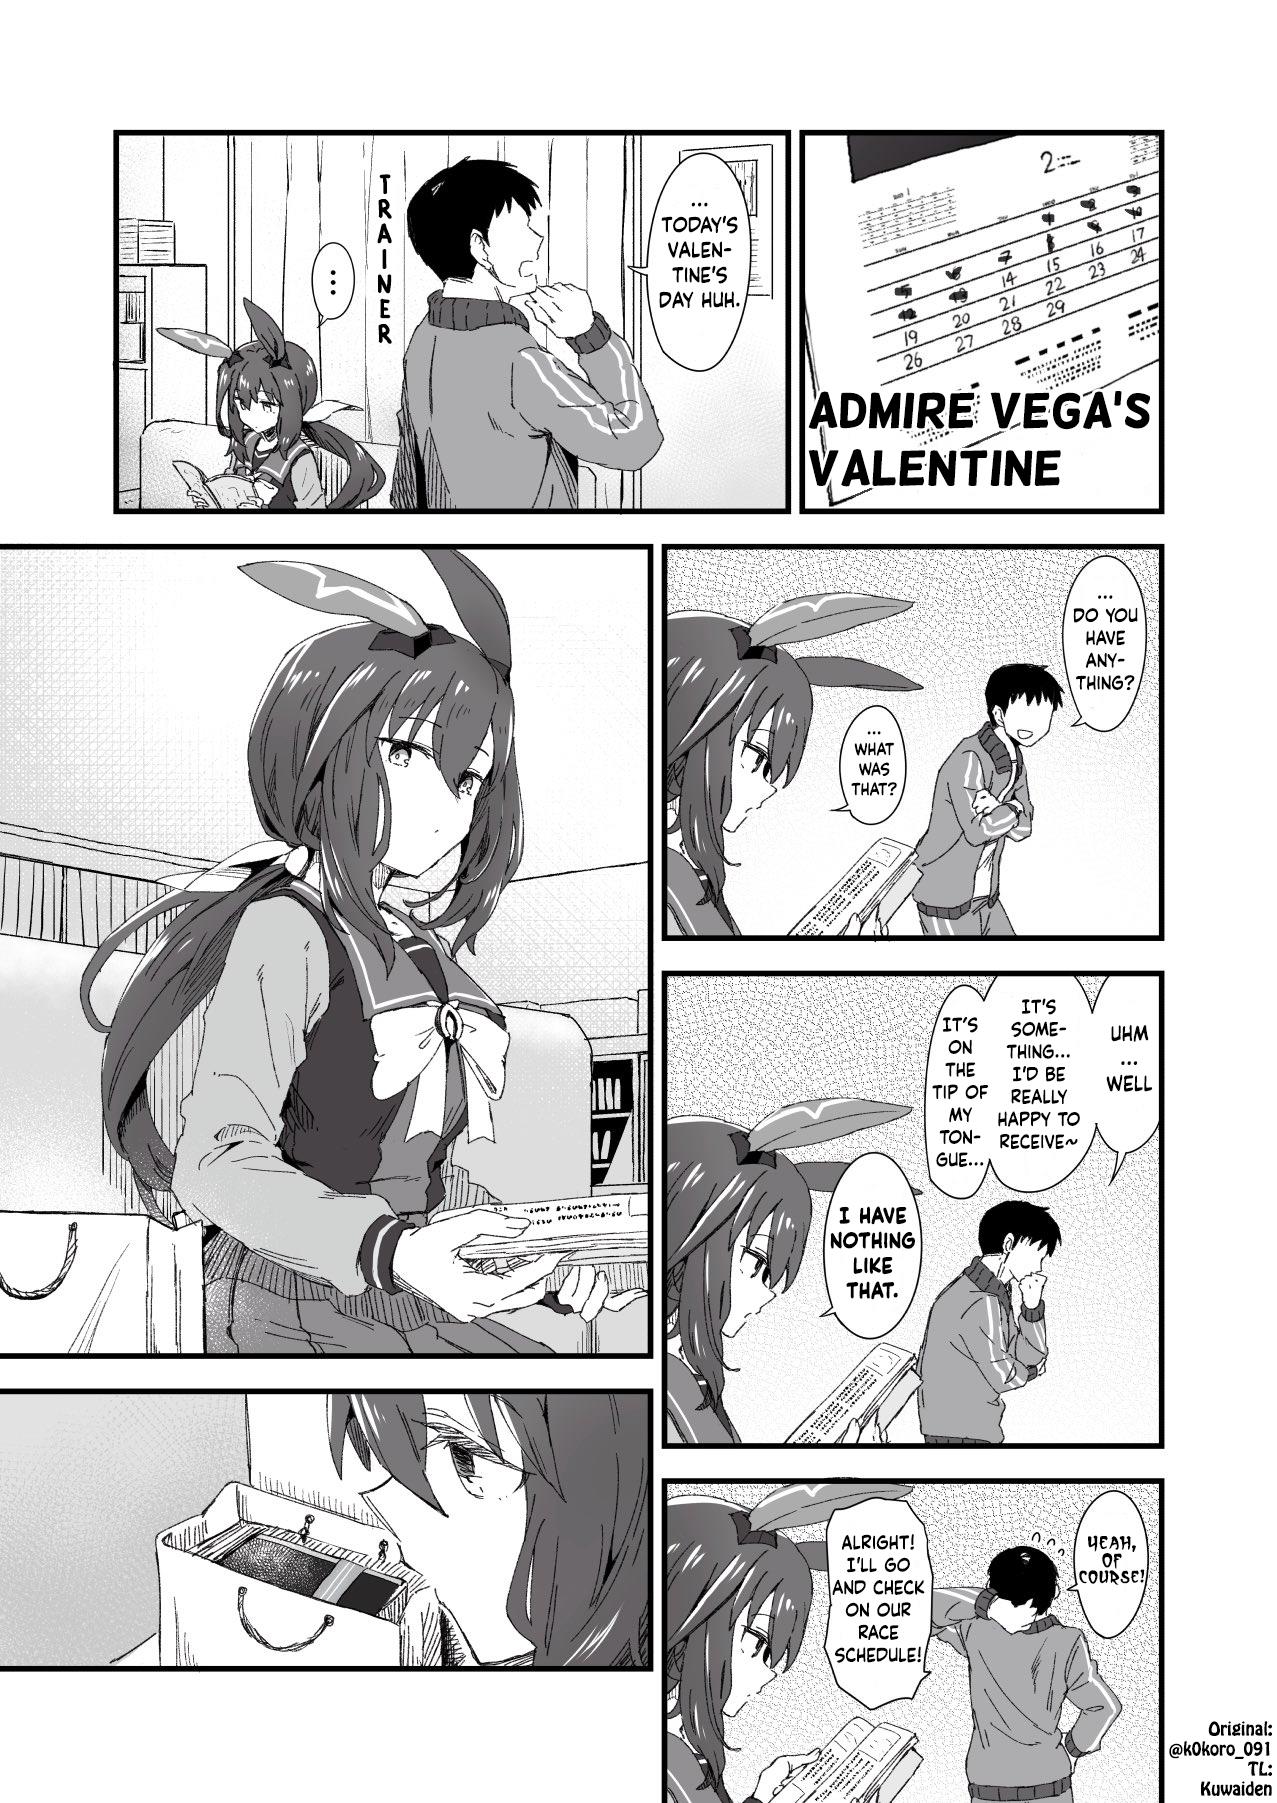 Kokoro-Sensei's Umamusume Shorts (Doujinshi) Chapter 39: Admire Vega's Valentine - Picture 1